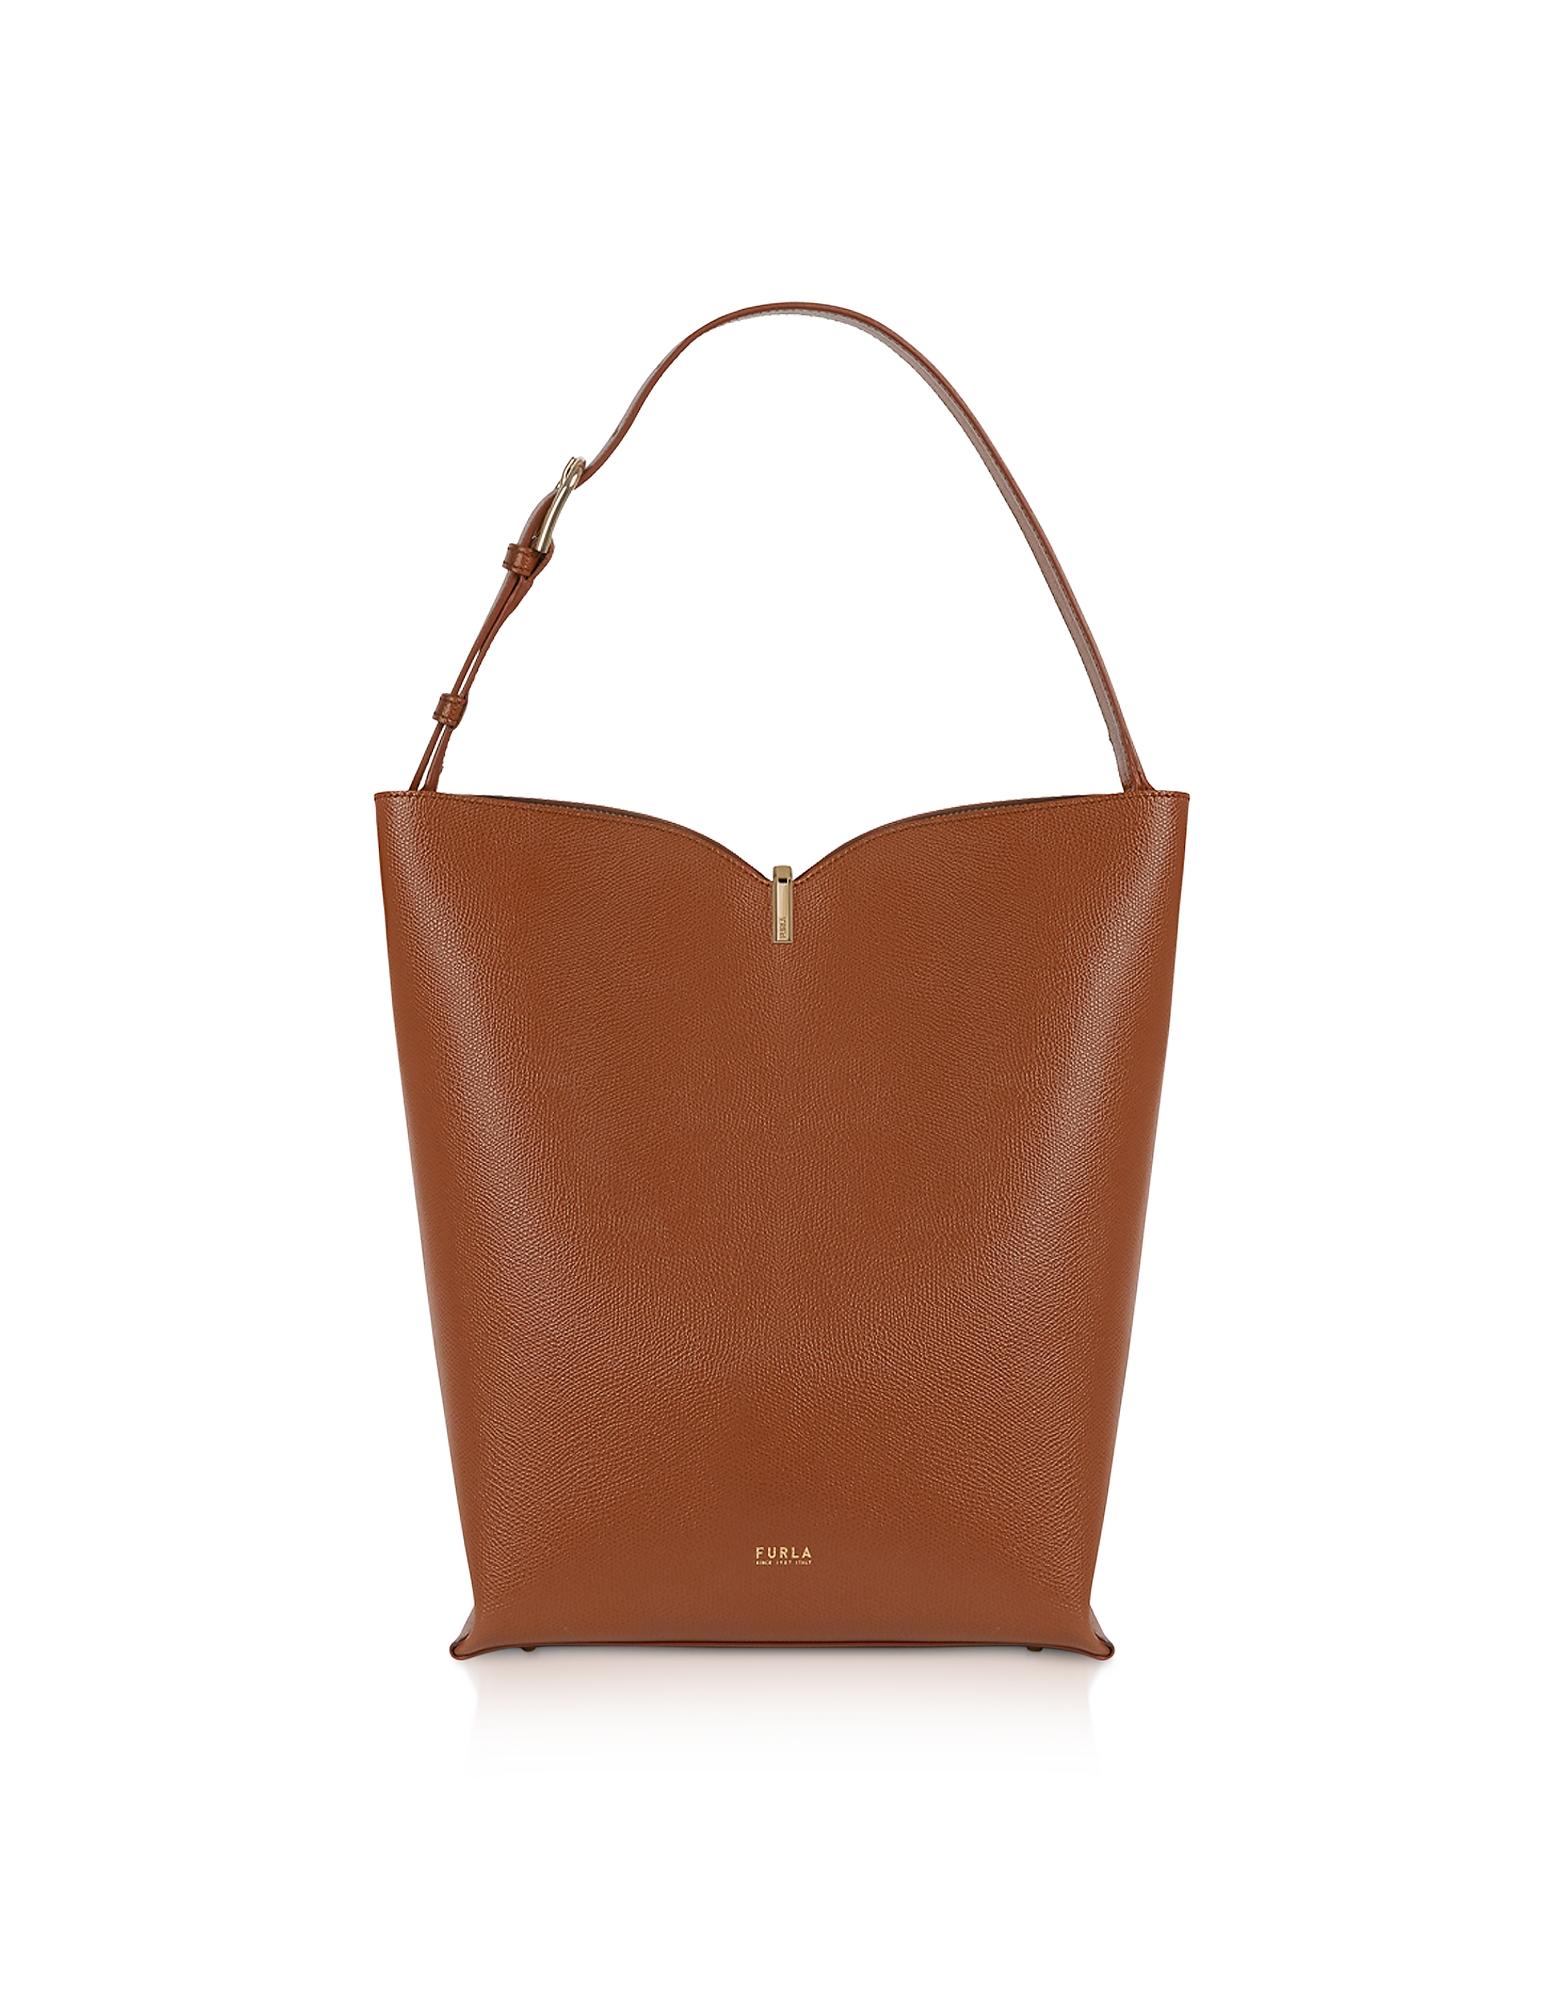 Furla Leather Ribbon M Hobo Bag in Cognac (Brown) - Lyst